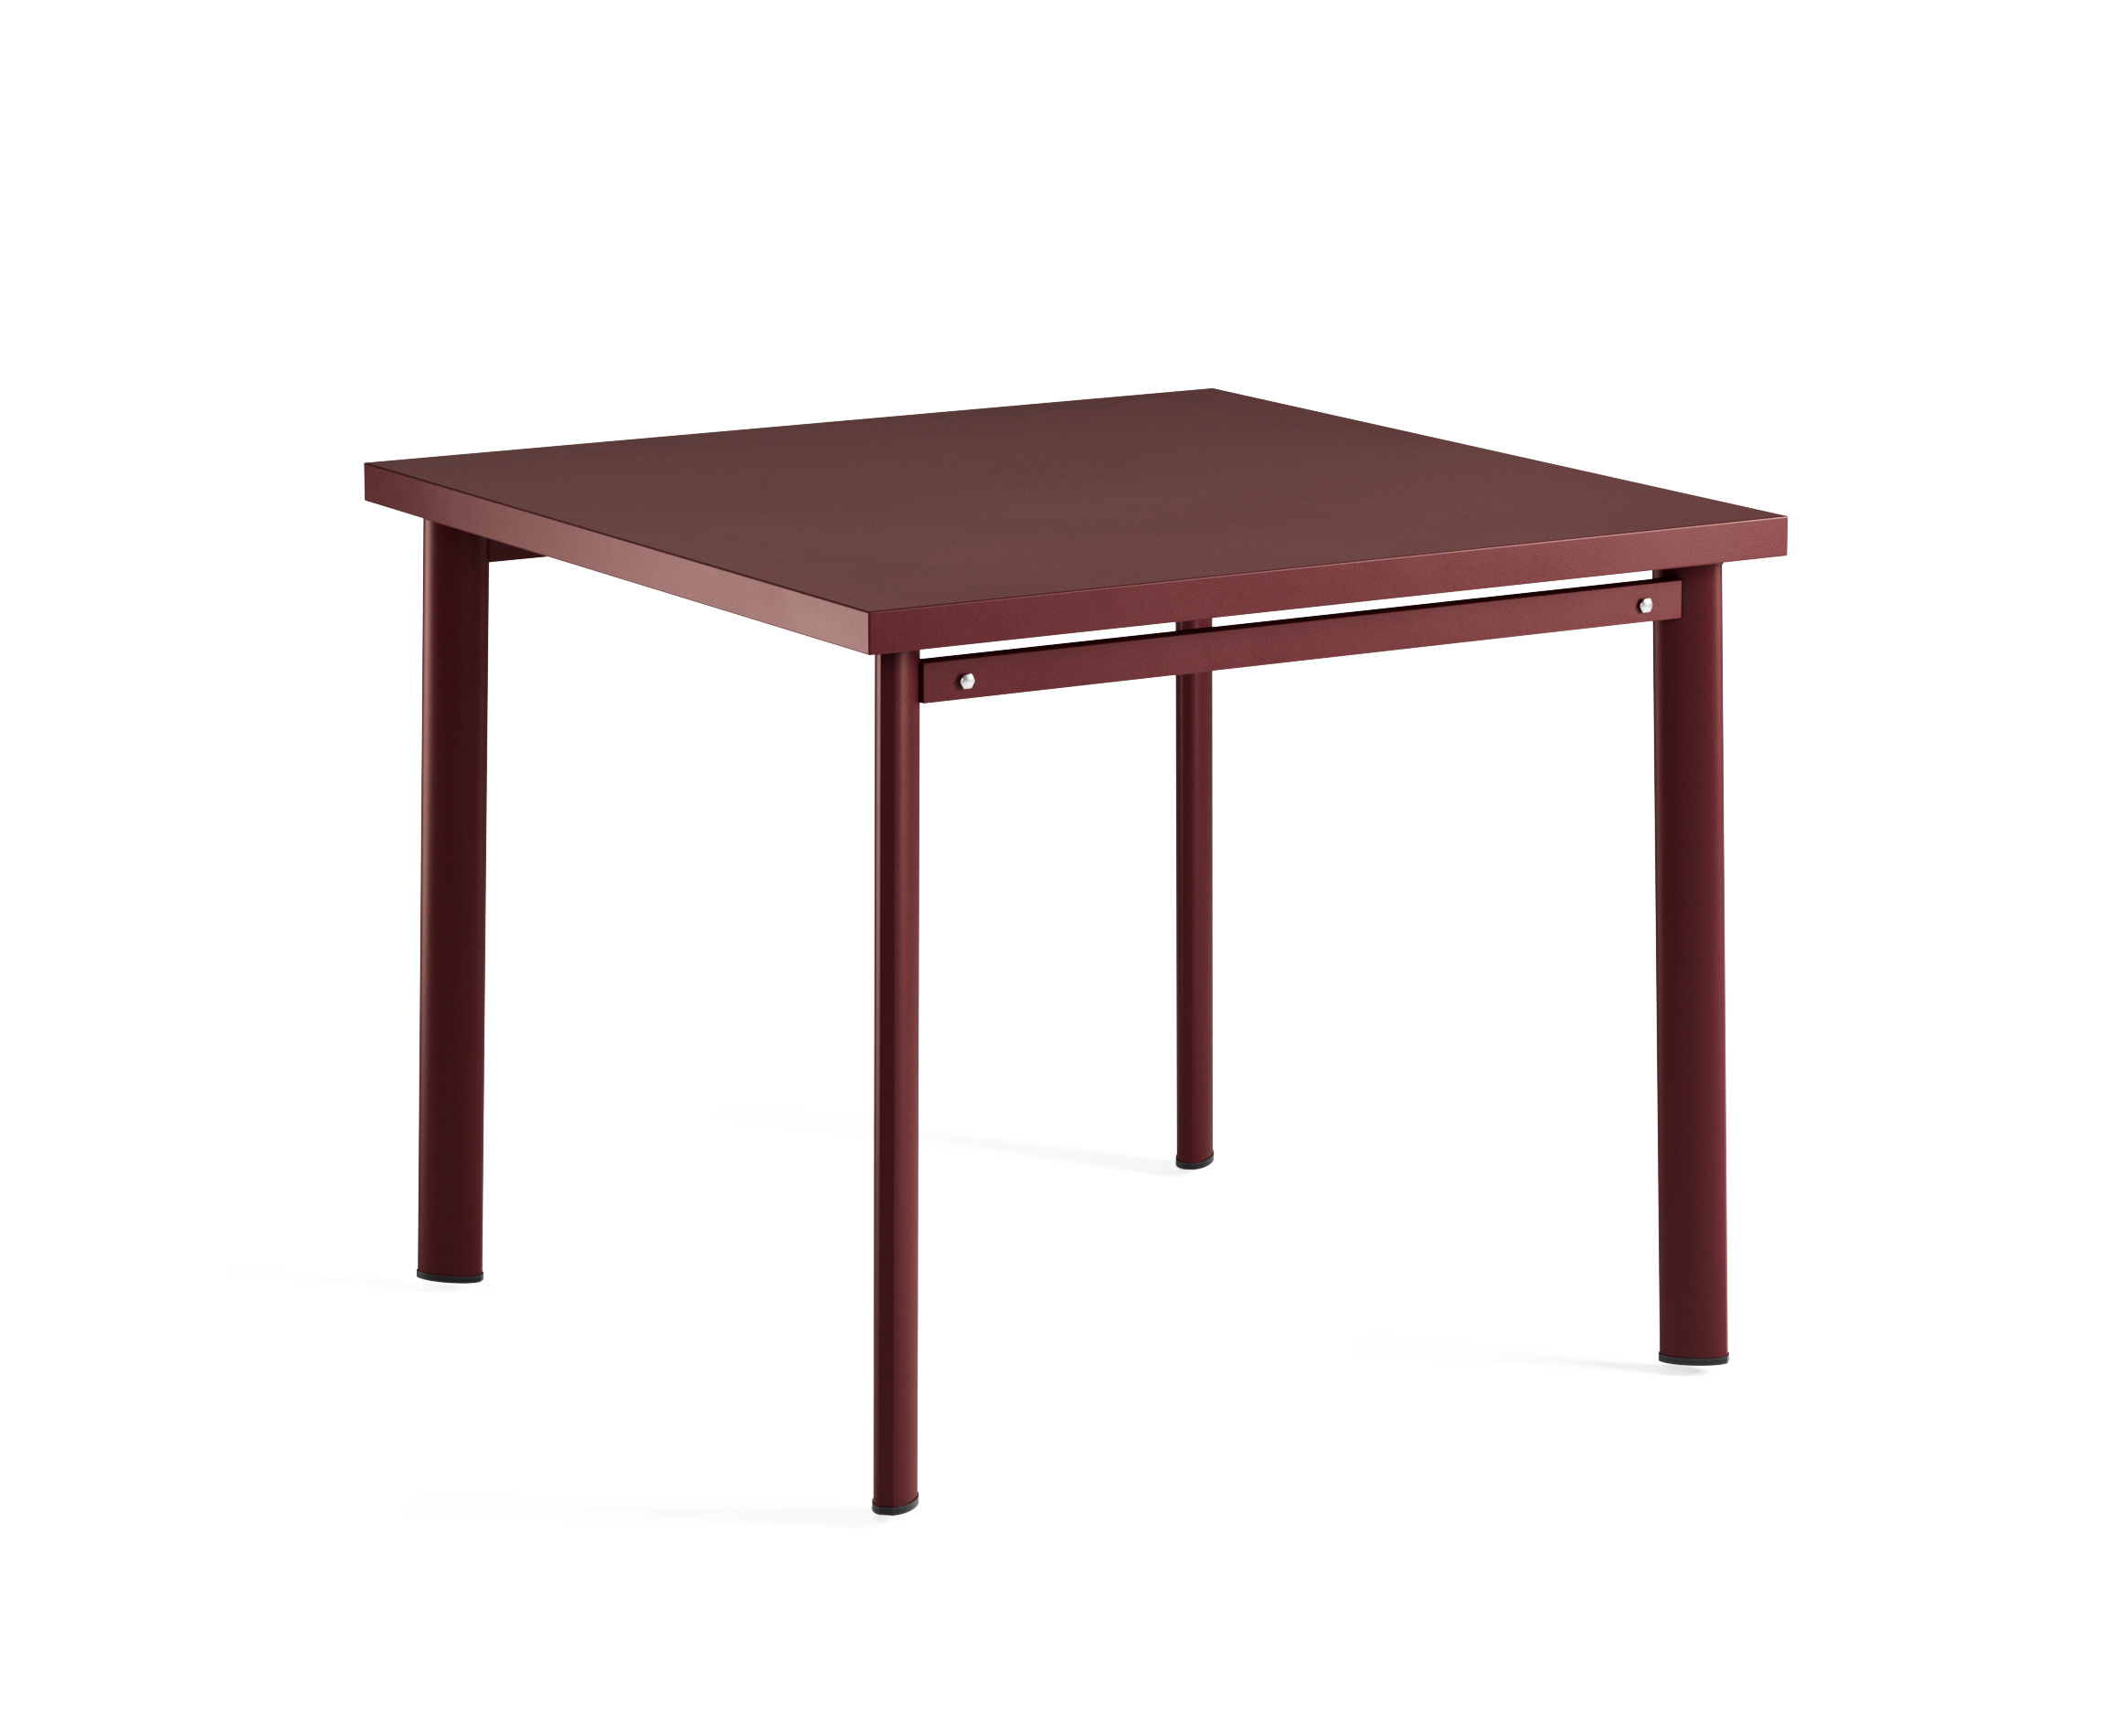 Star Tisch, 90 x 90 cm, grau